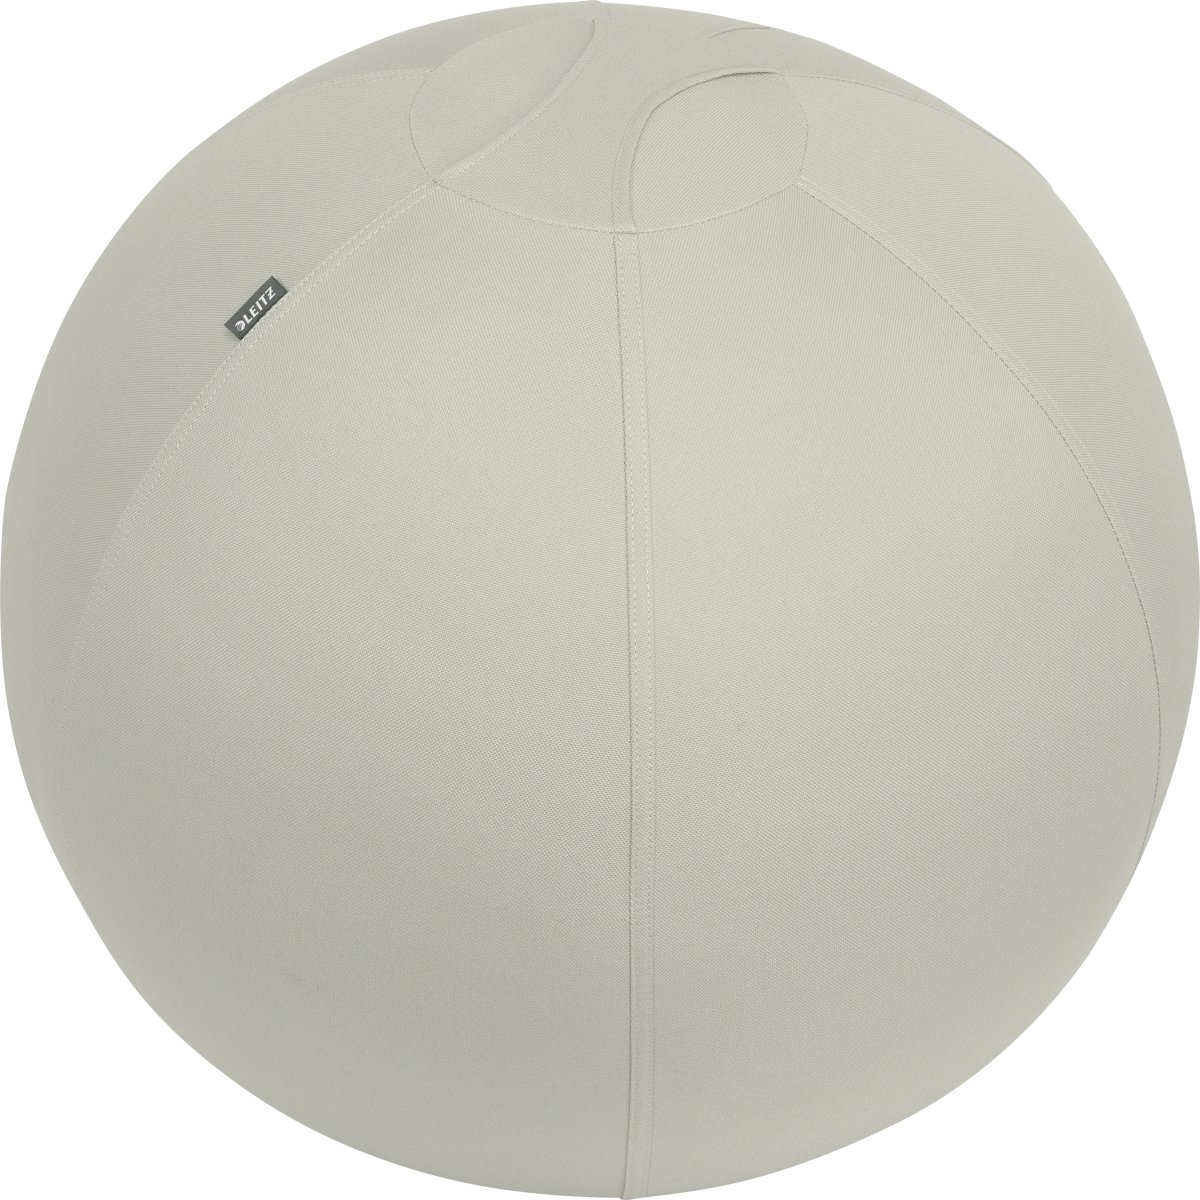 Leitz Ergo Active balancebold, grå, 65 cm